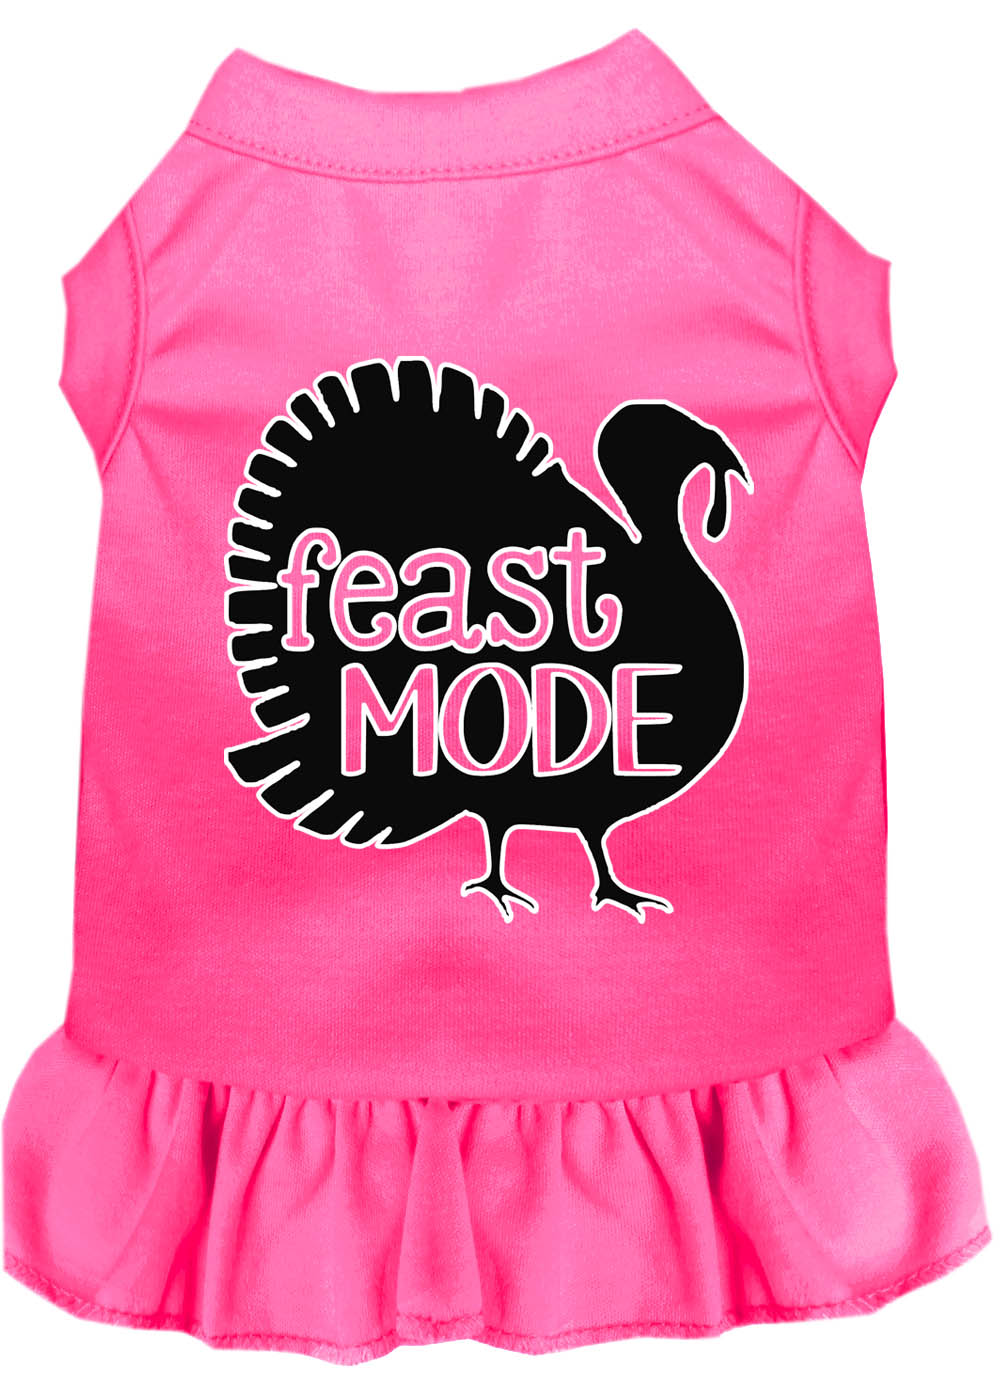 Feast Mode Screen Print Dog Dress Bright Pink XXL